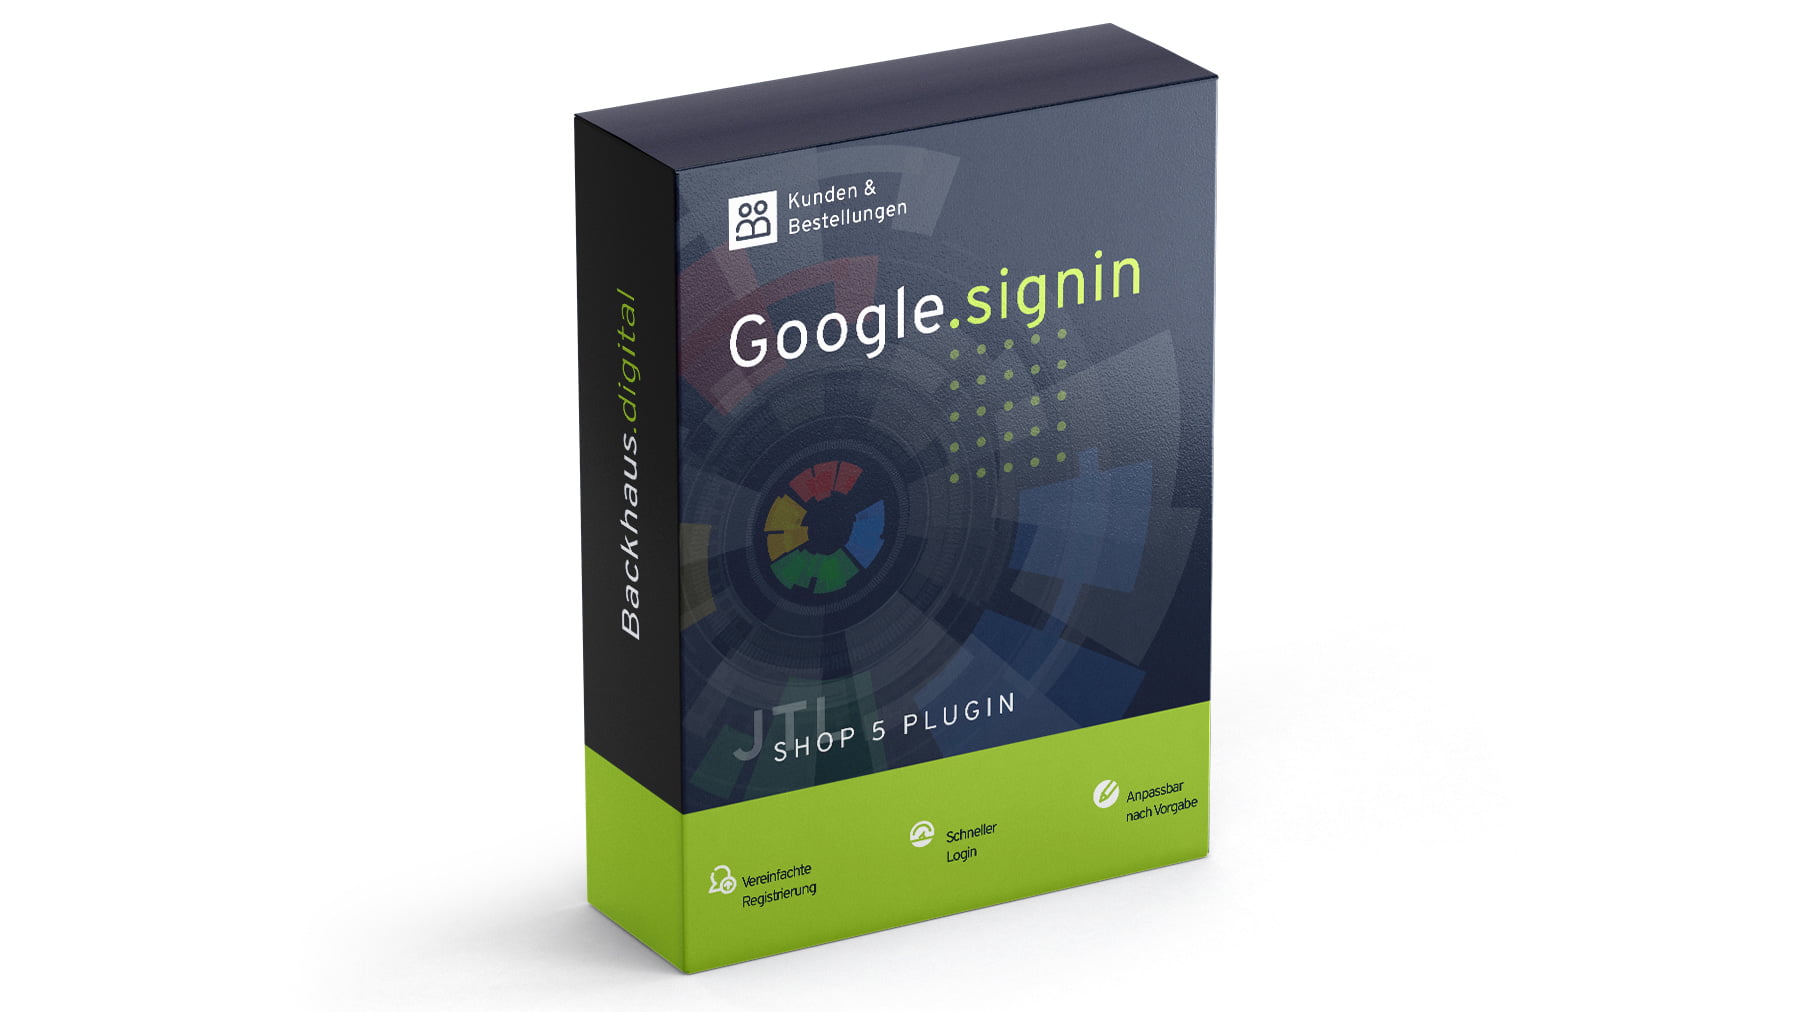 jtl-plugin-google-signin-cover-min